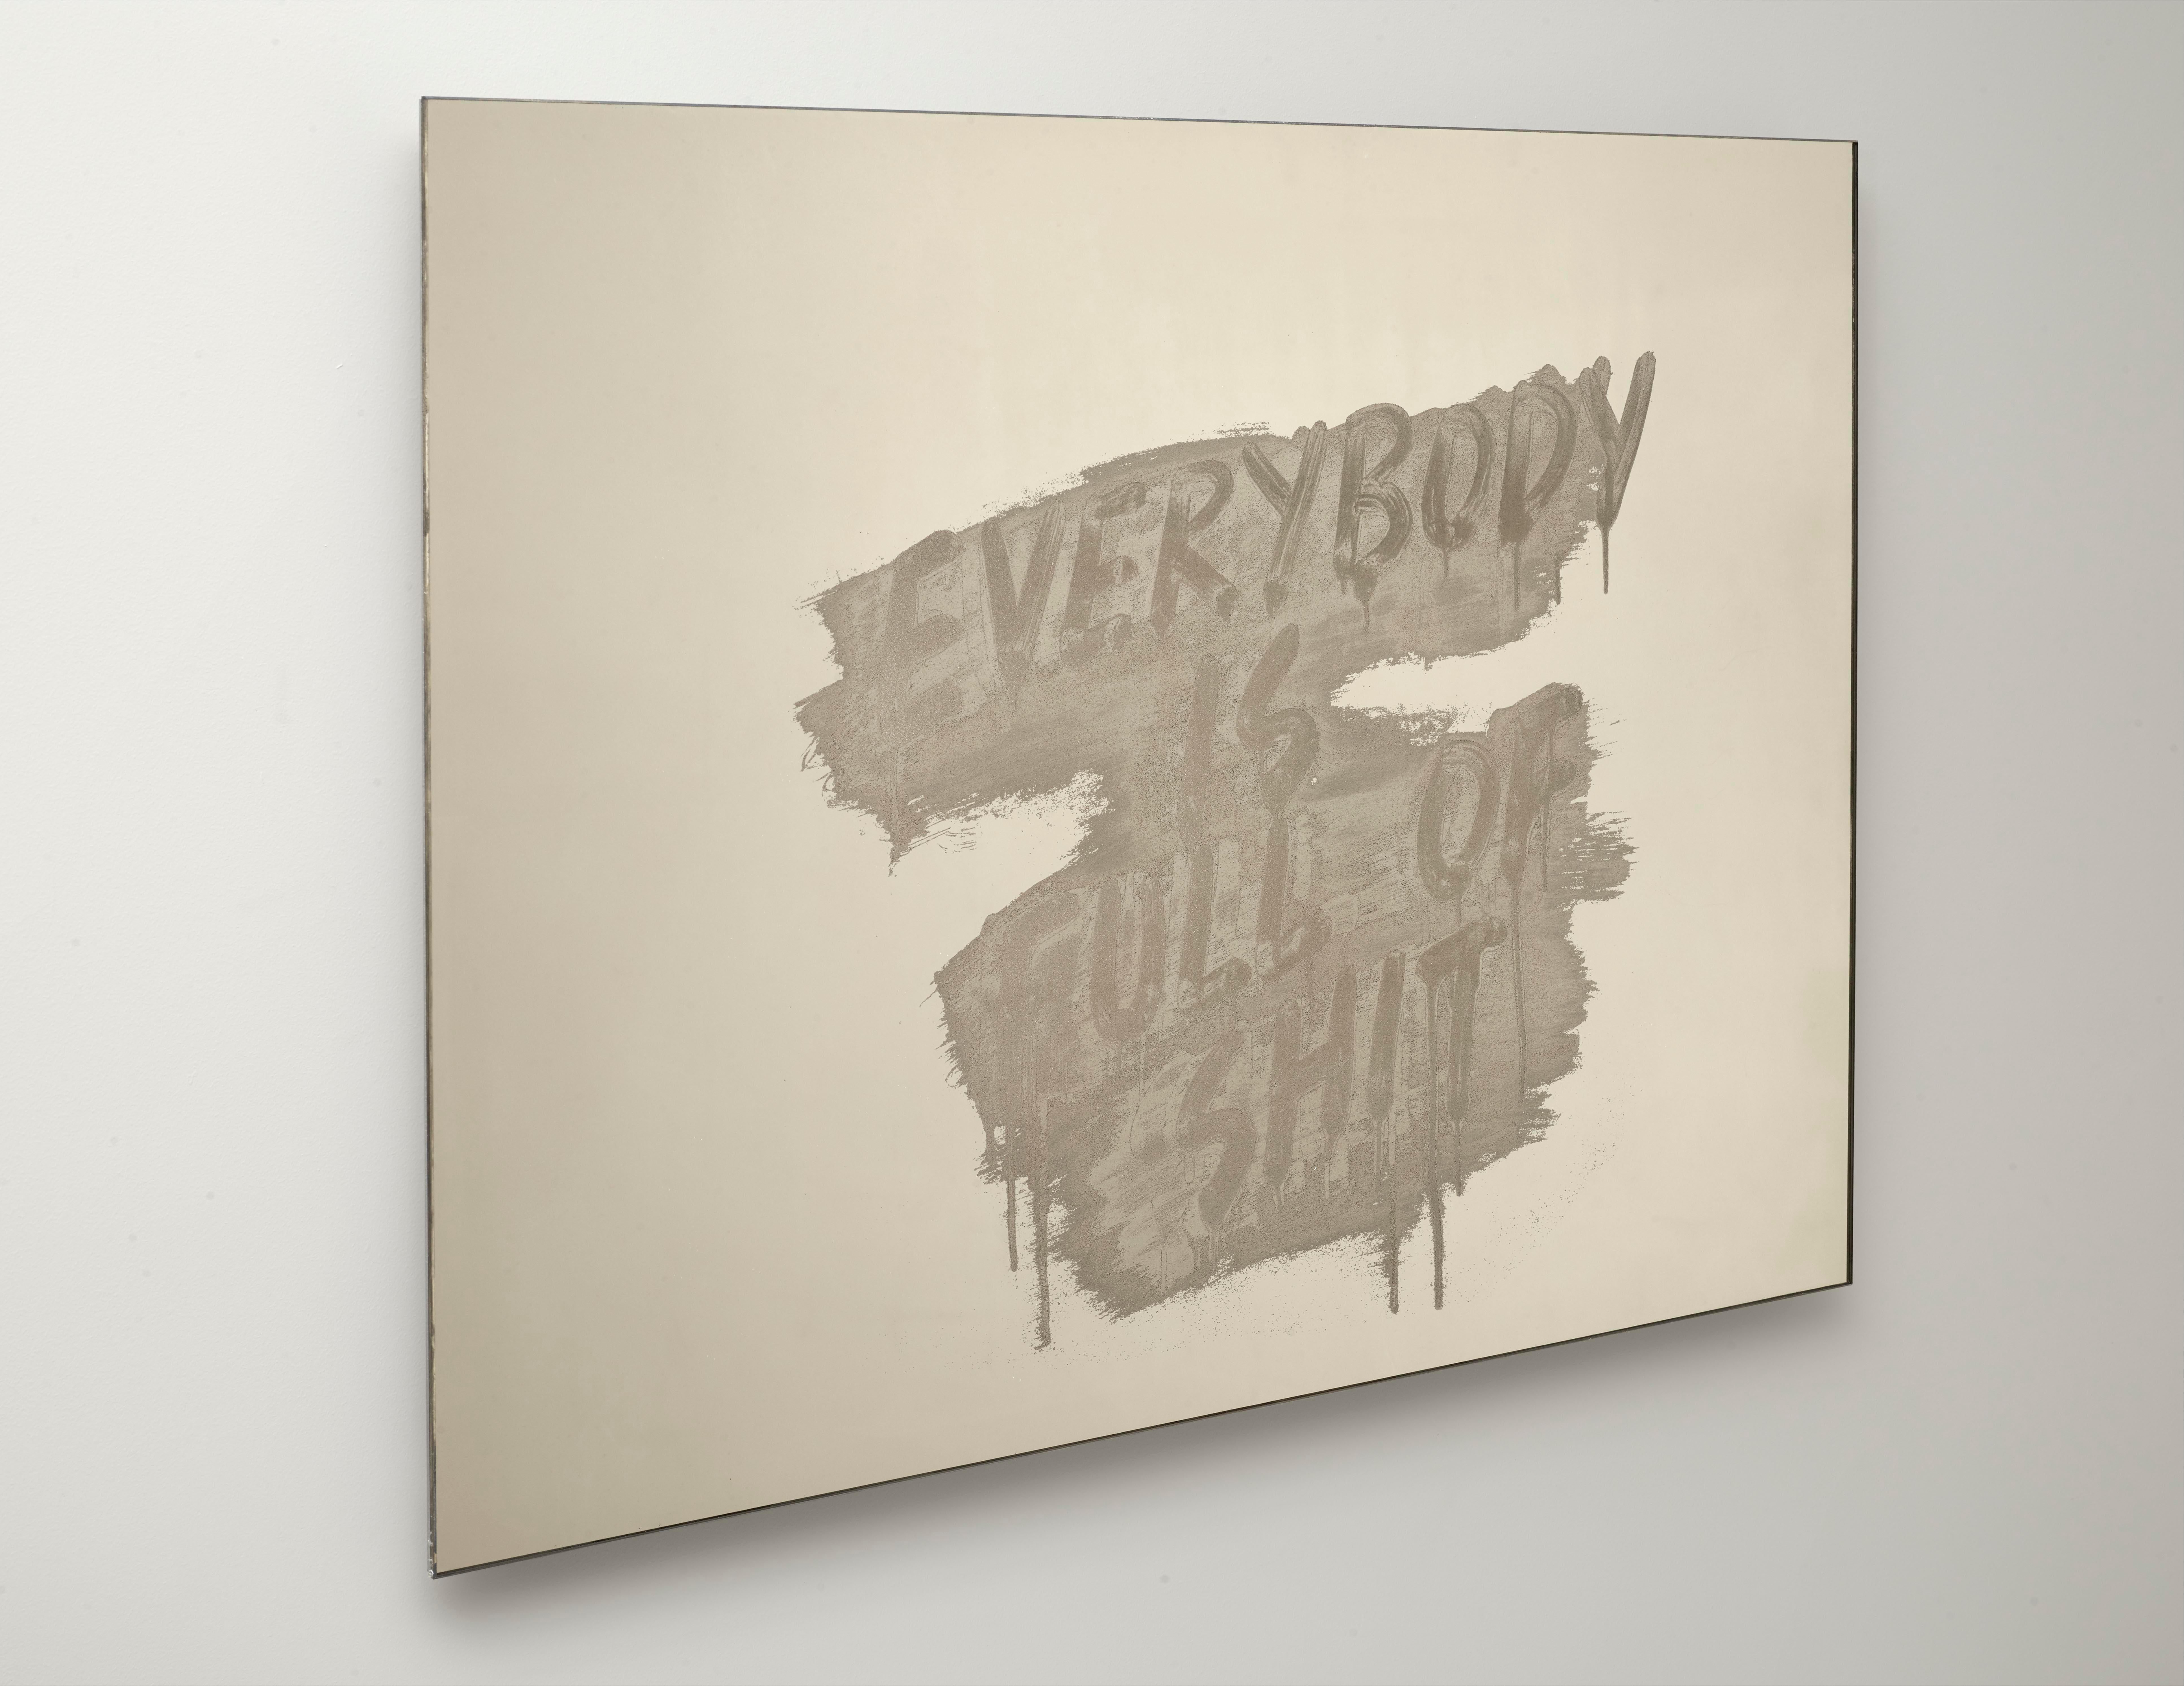 "Everybody is Full of Shit" by American artist Mel Bochner